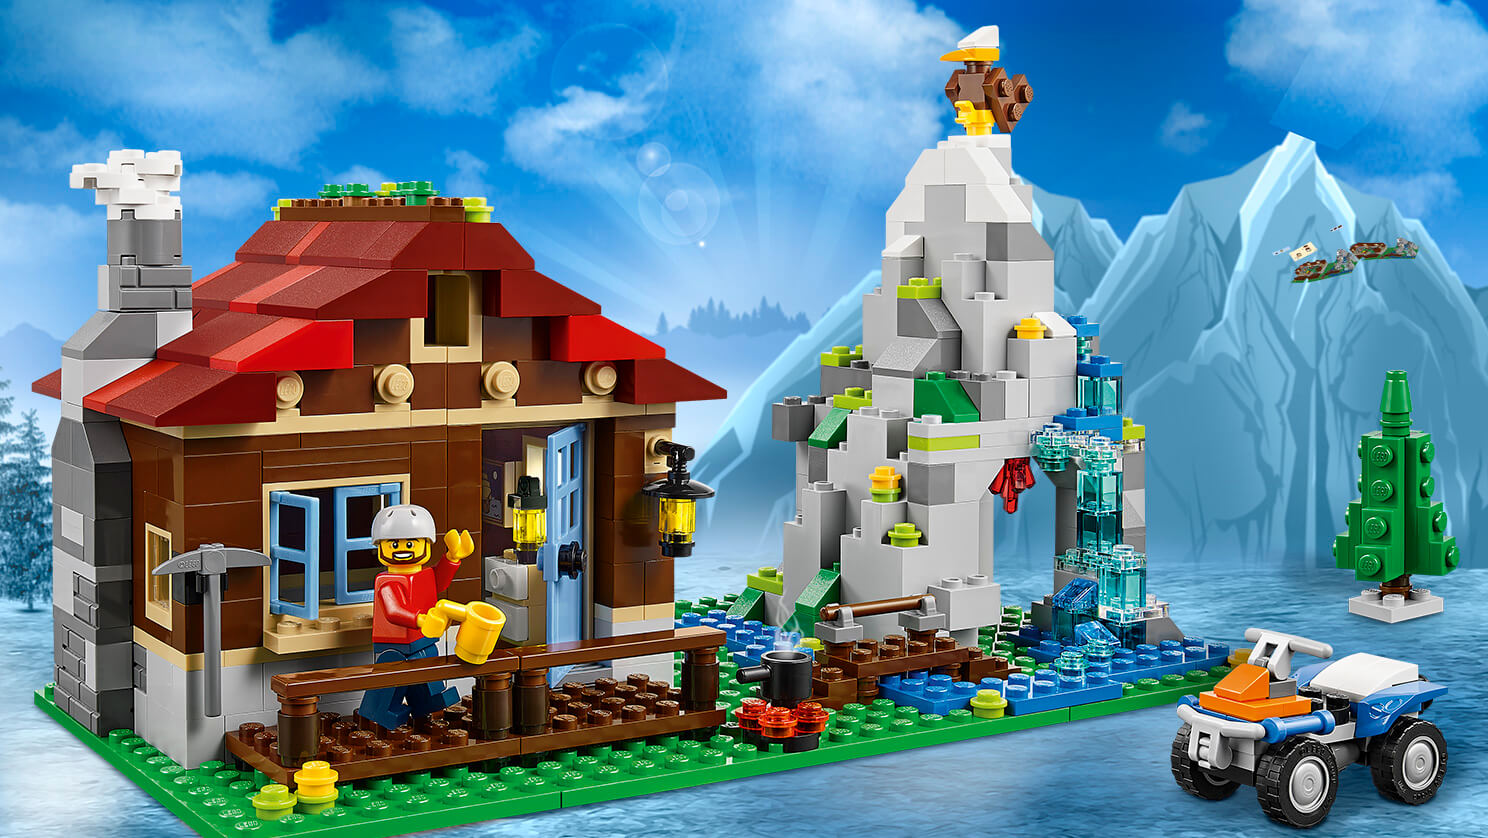 Mountain Hut - Videos - LEGO.com for kids